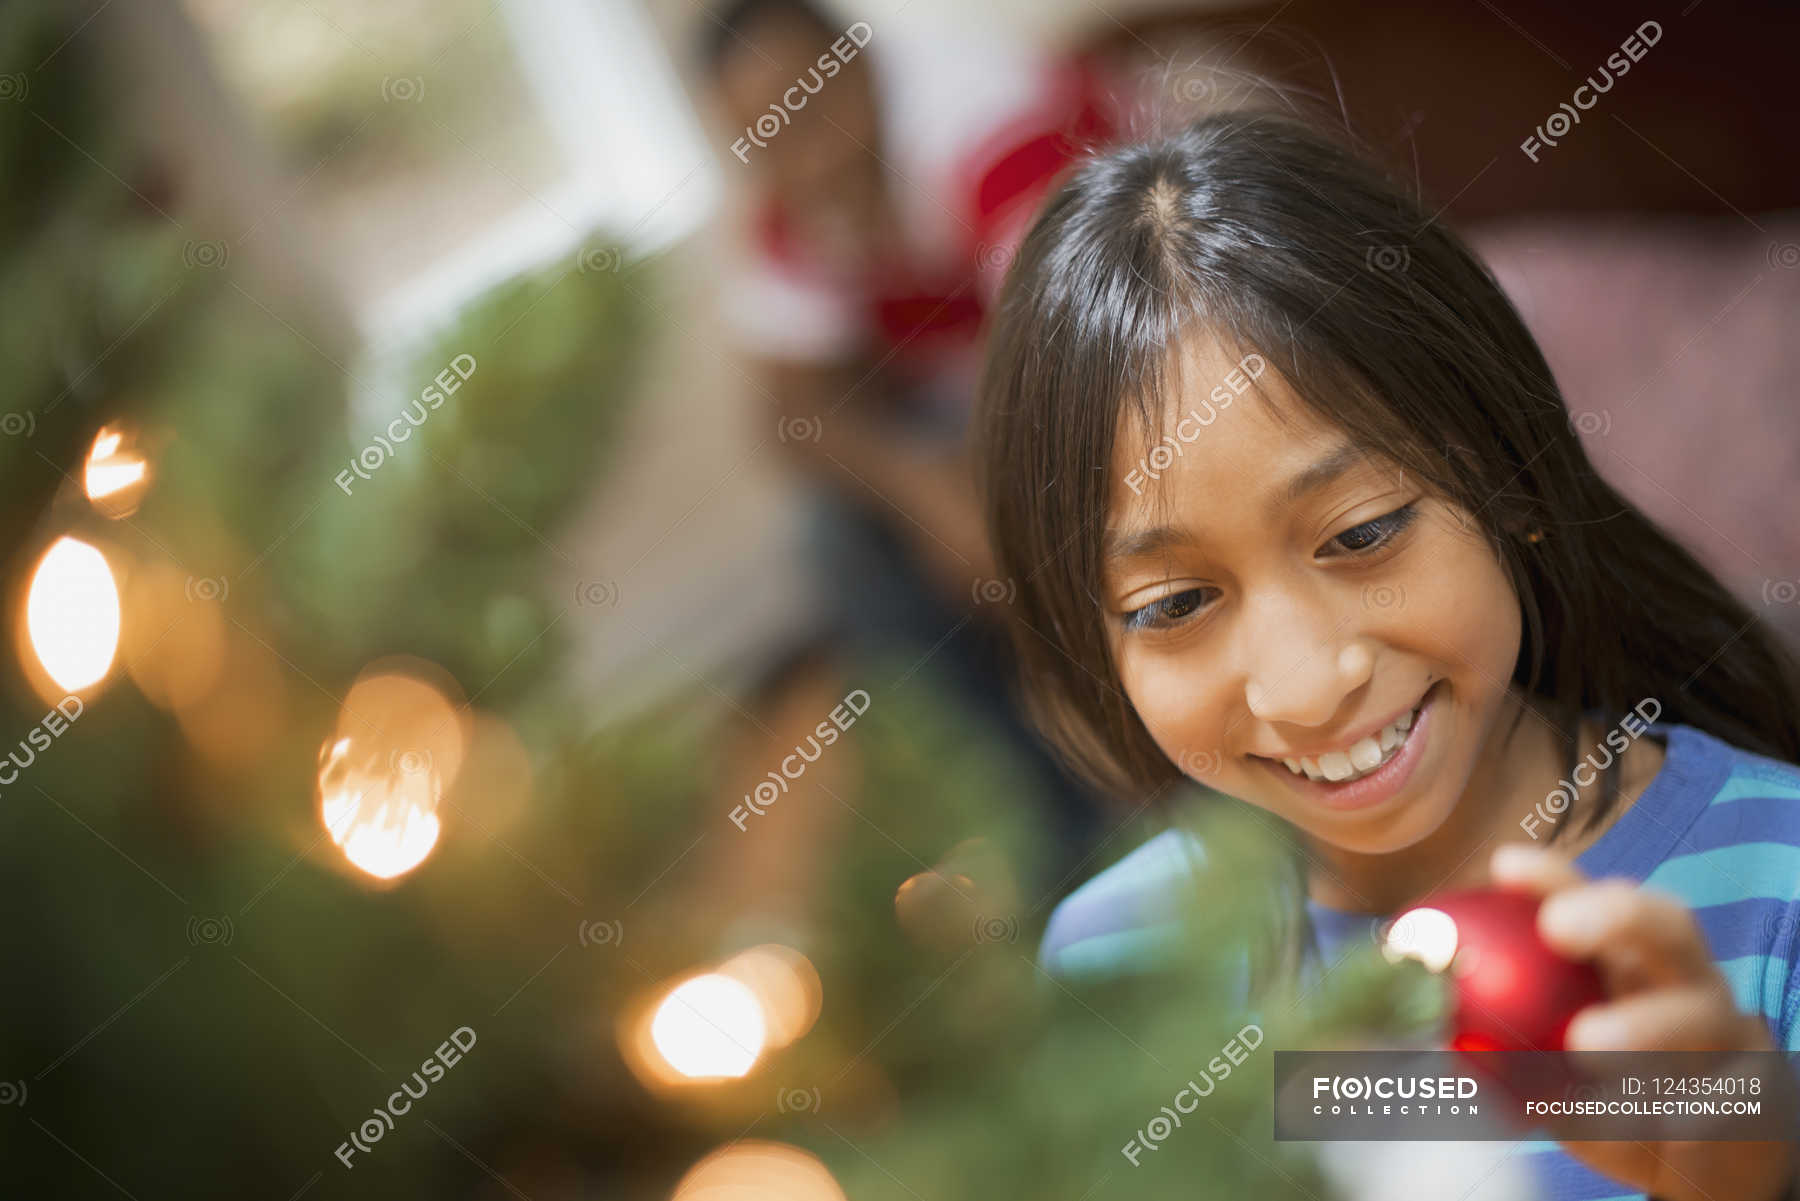 Girl placing bauble on Christmas tree — Stock Photo | #124354018